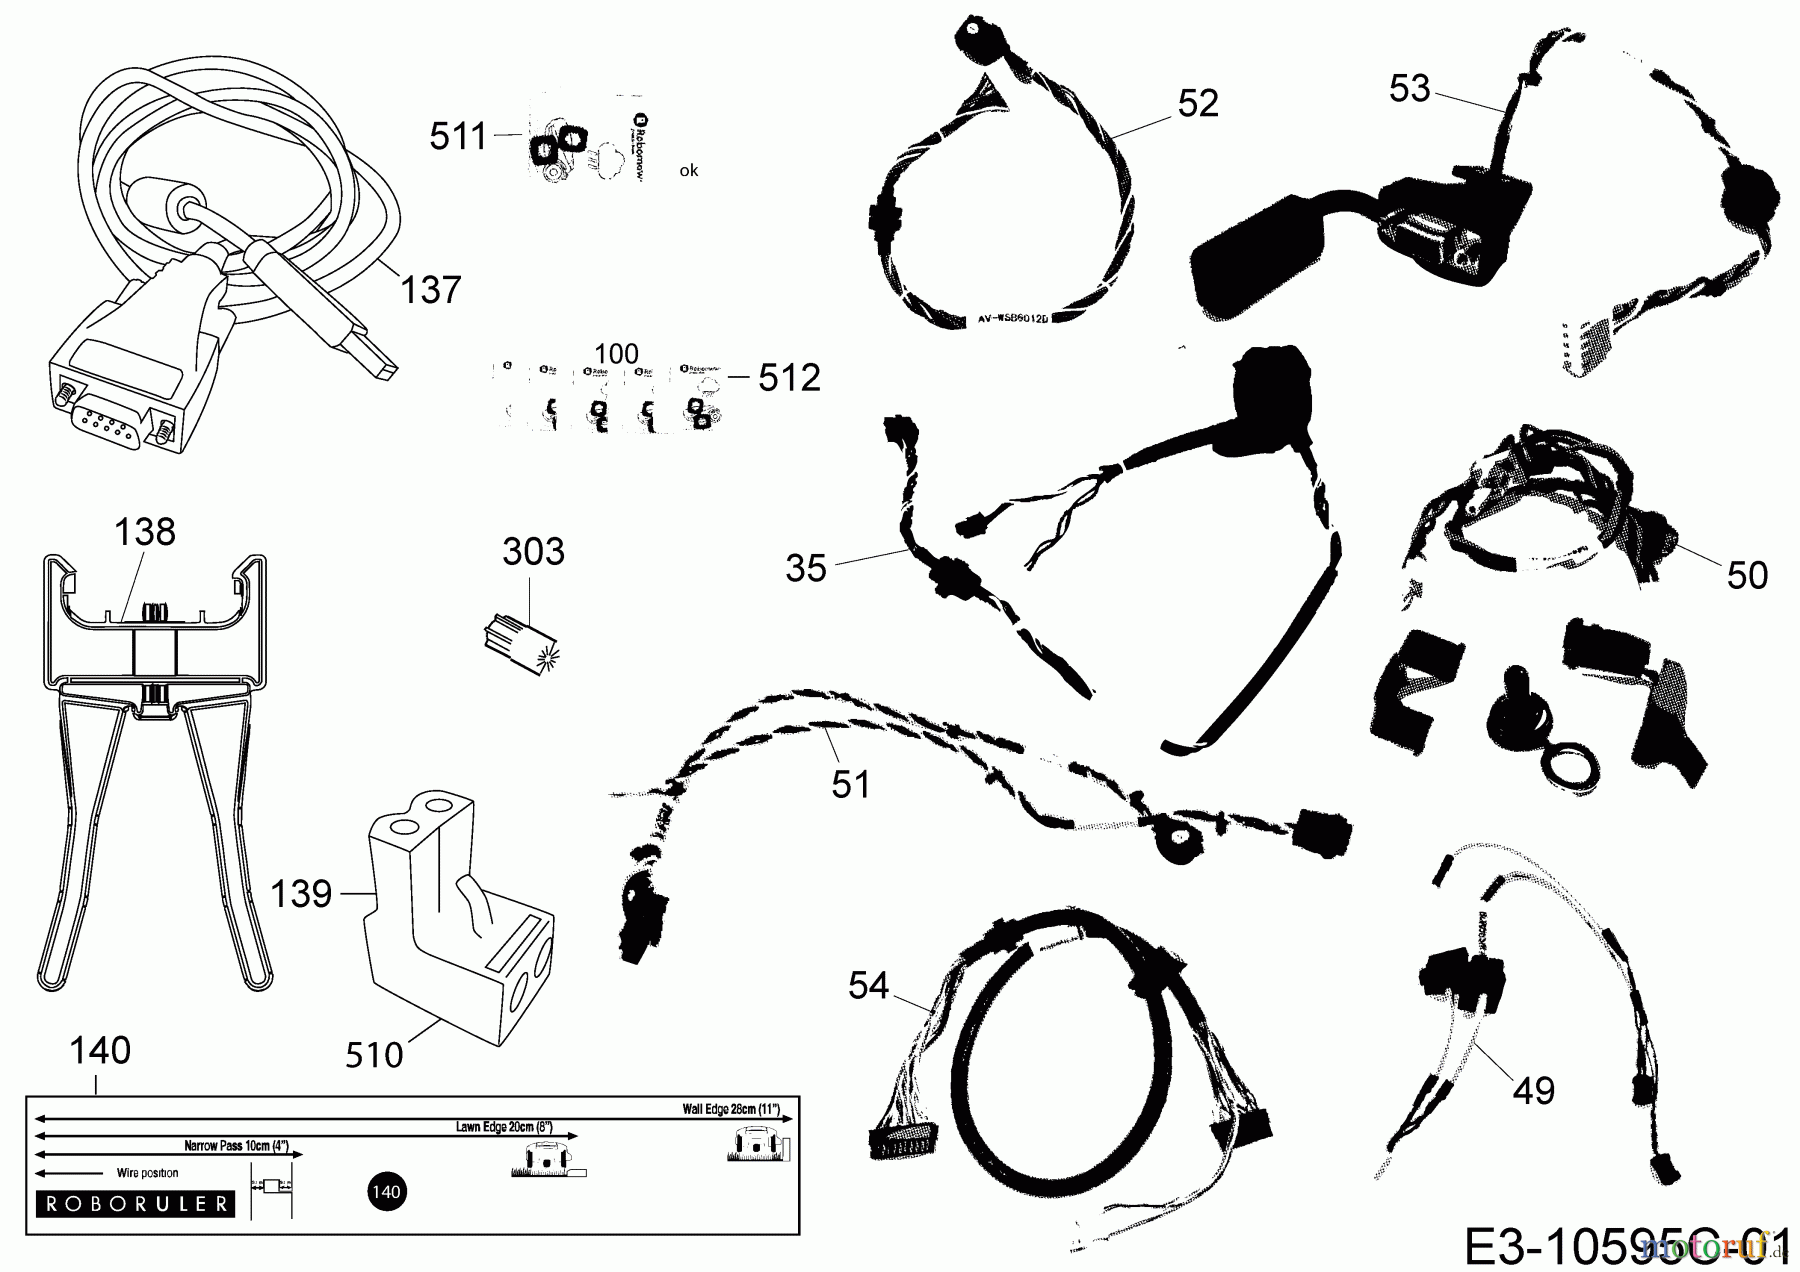  Robomow Mähroboter MS 1500 (Black) PRD6100P3  (2016) Kabel, Kabelanschluß, Regensensor, Werkzeug